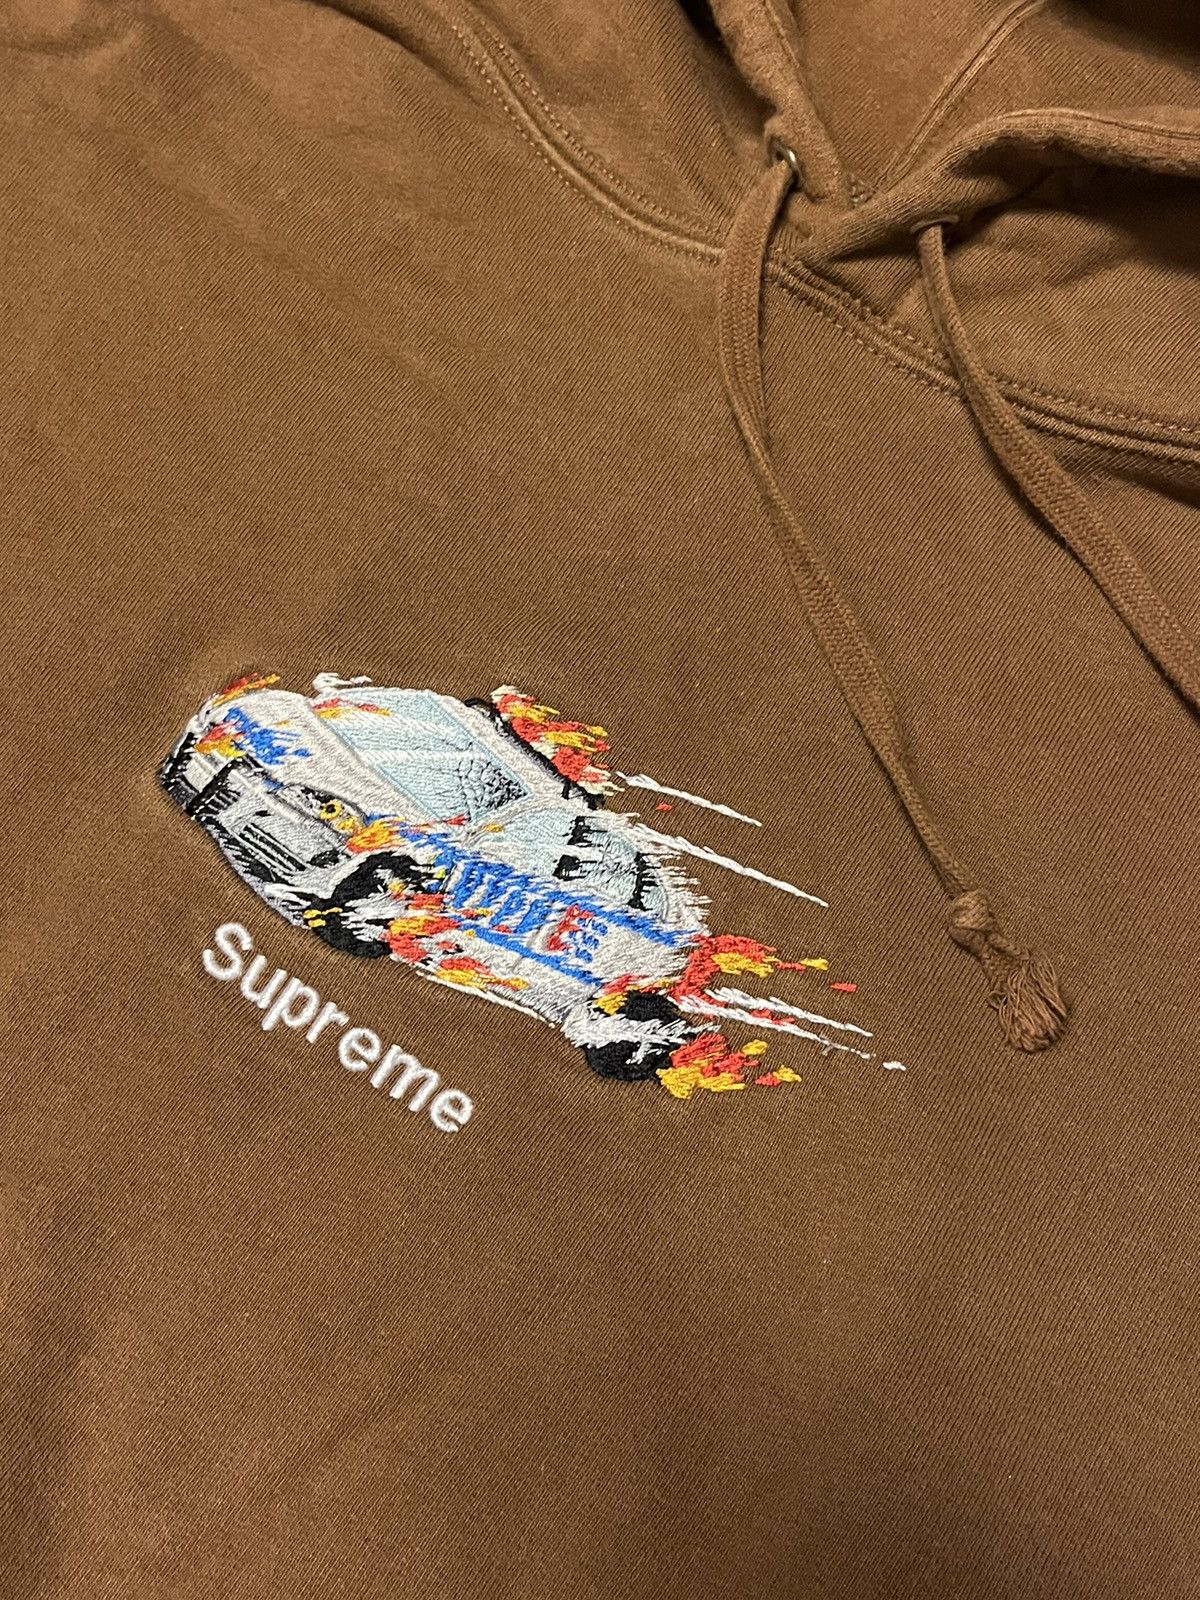 Supreme Supreme burn burning cop car nyc ny nypd brown large hoodie |  Grailed